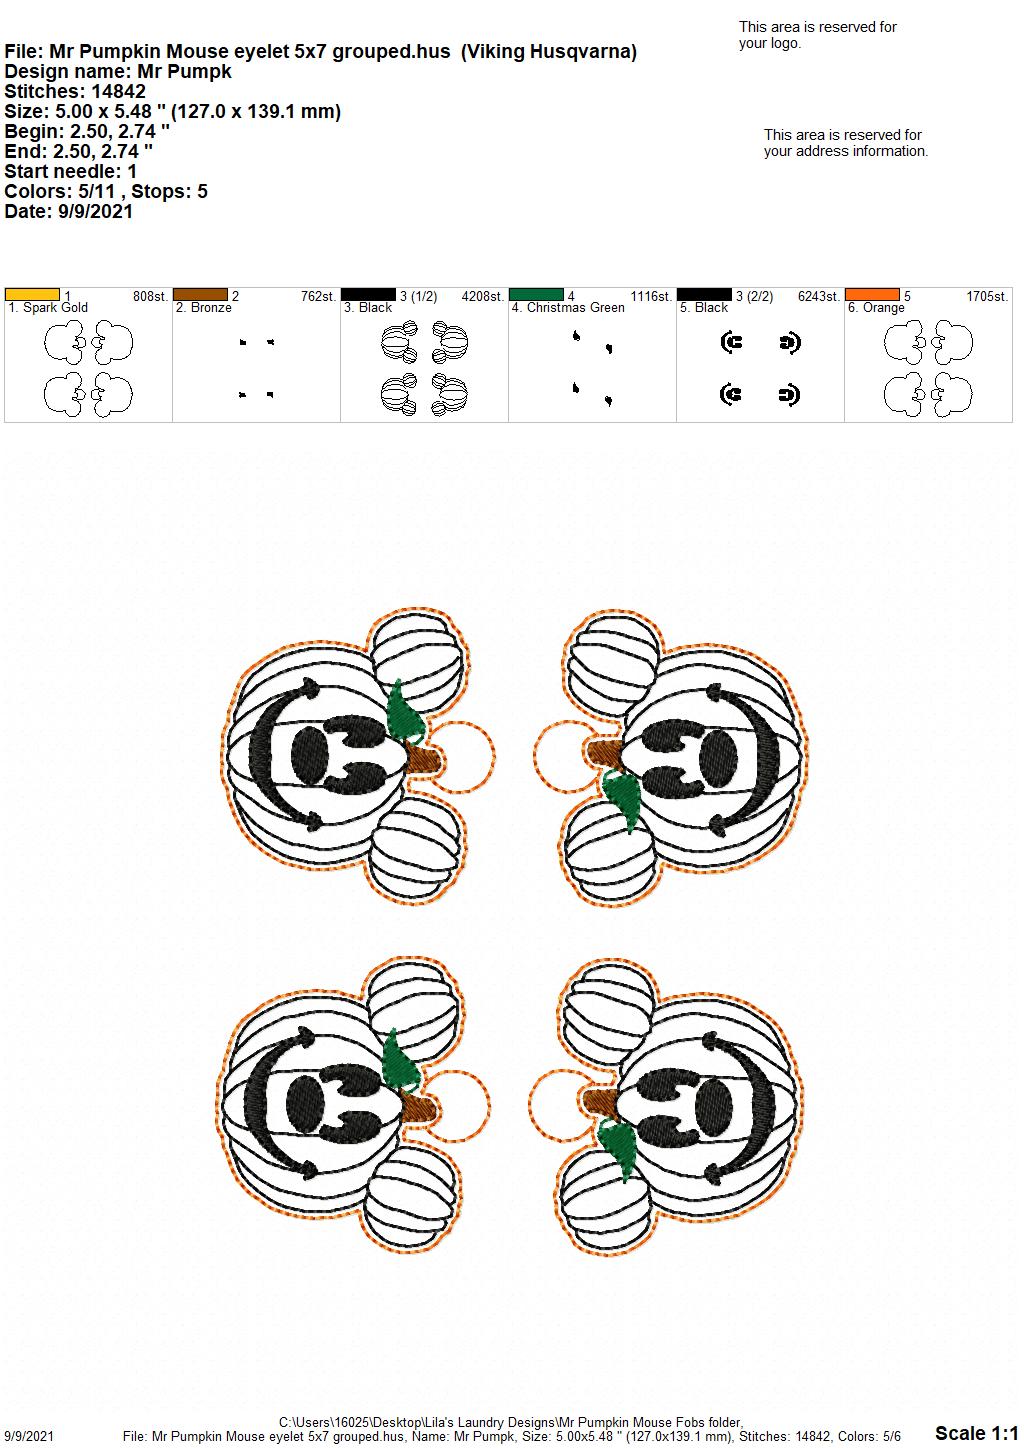 Mr. Pumpkin Mouse Fobs - DIGITAL Embroidery DESIGN